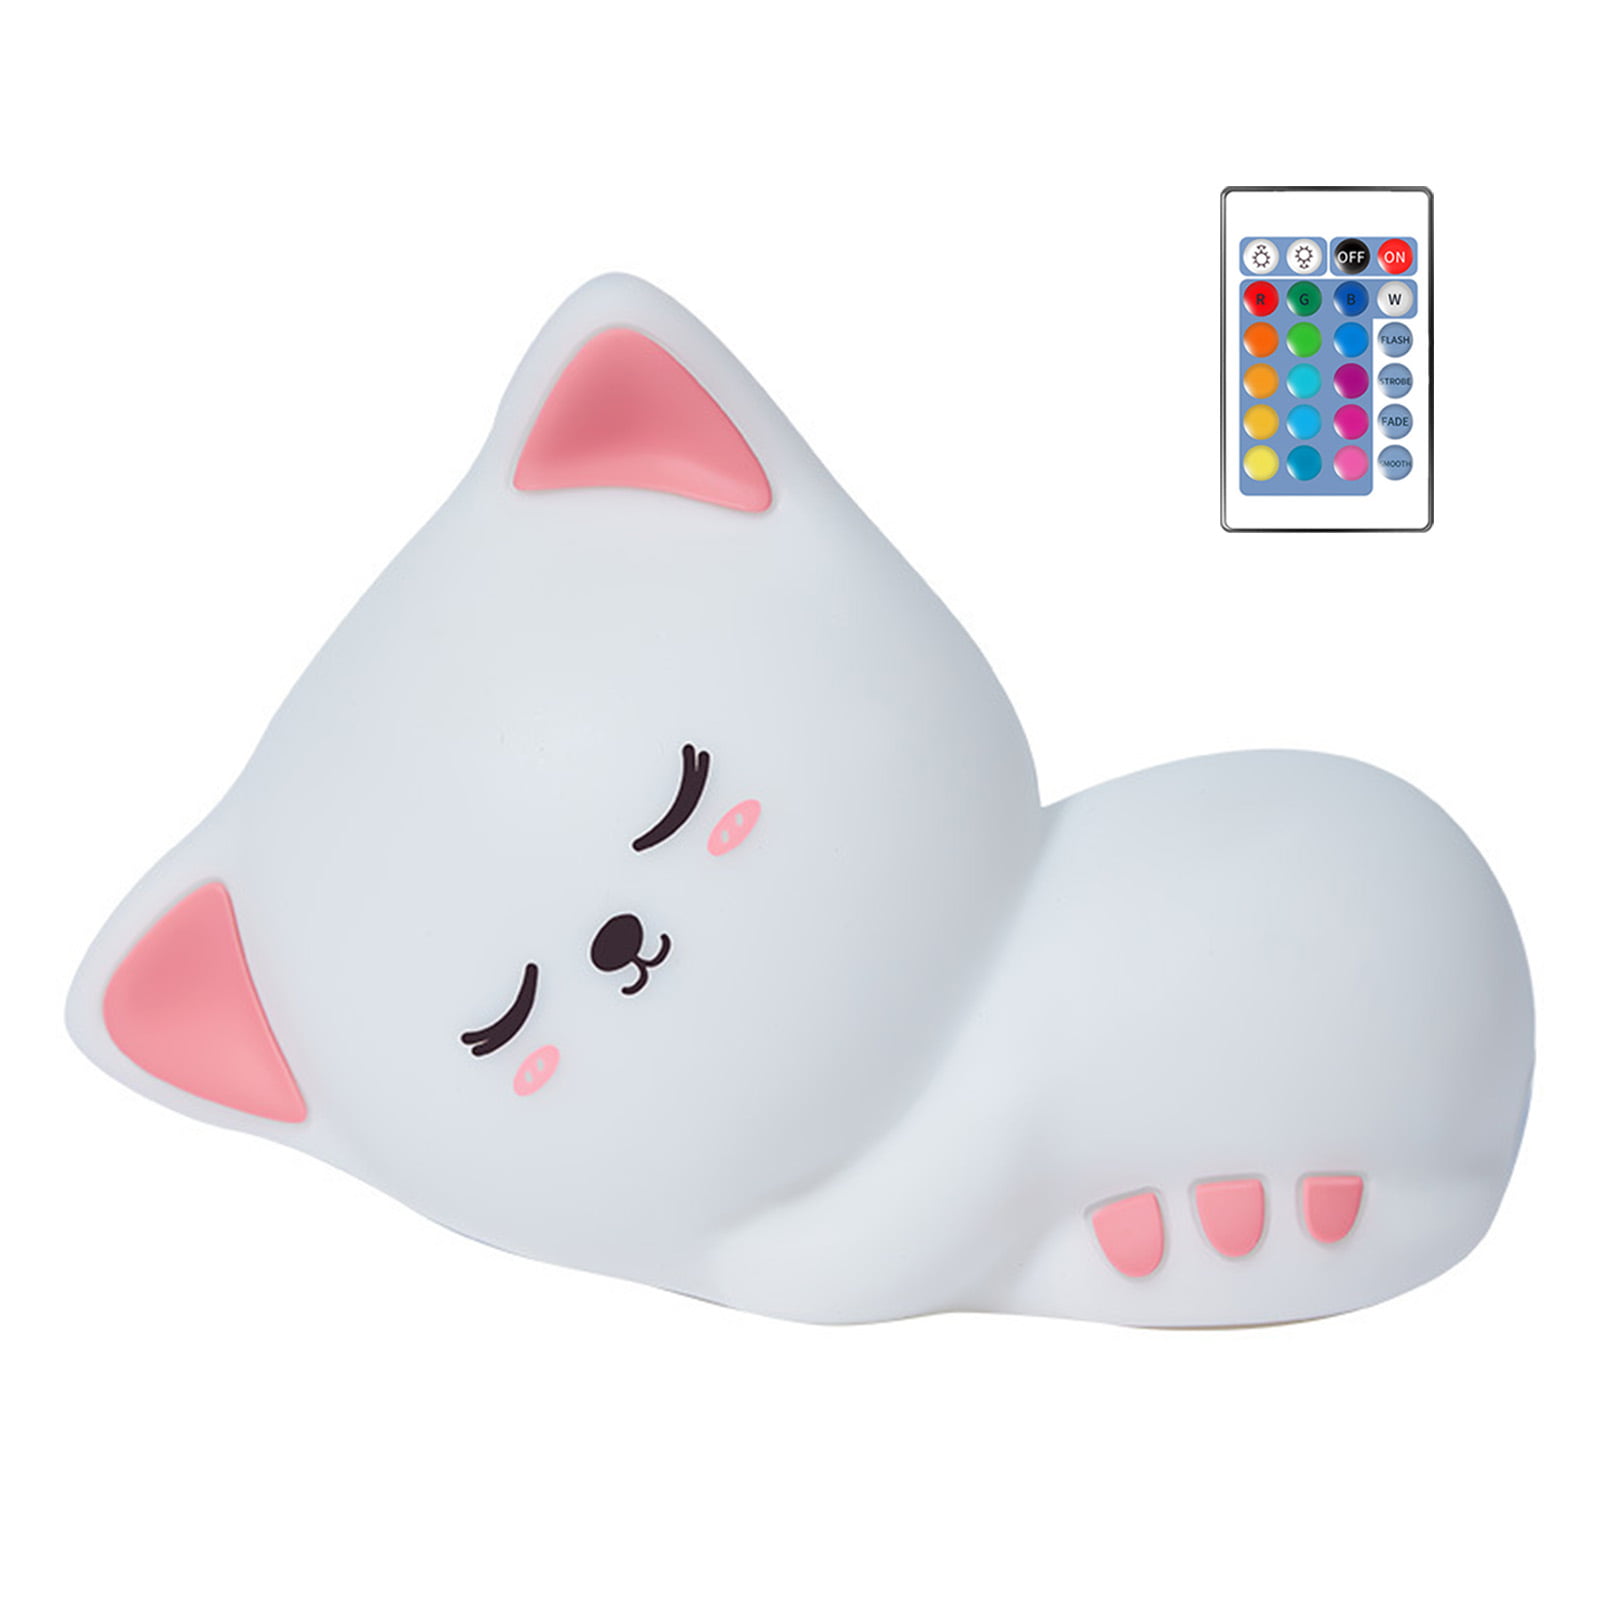 Details about   Cute 7 Colors Cat Soft Silicone LED Touch Sensor Light Cute Night Li_fr 